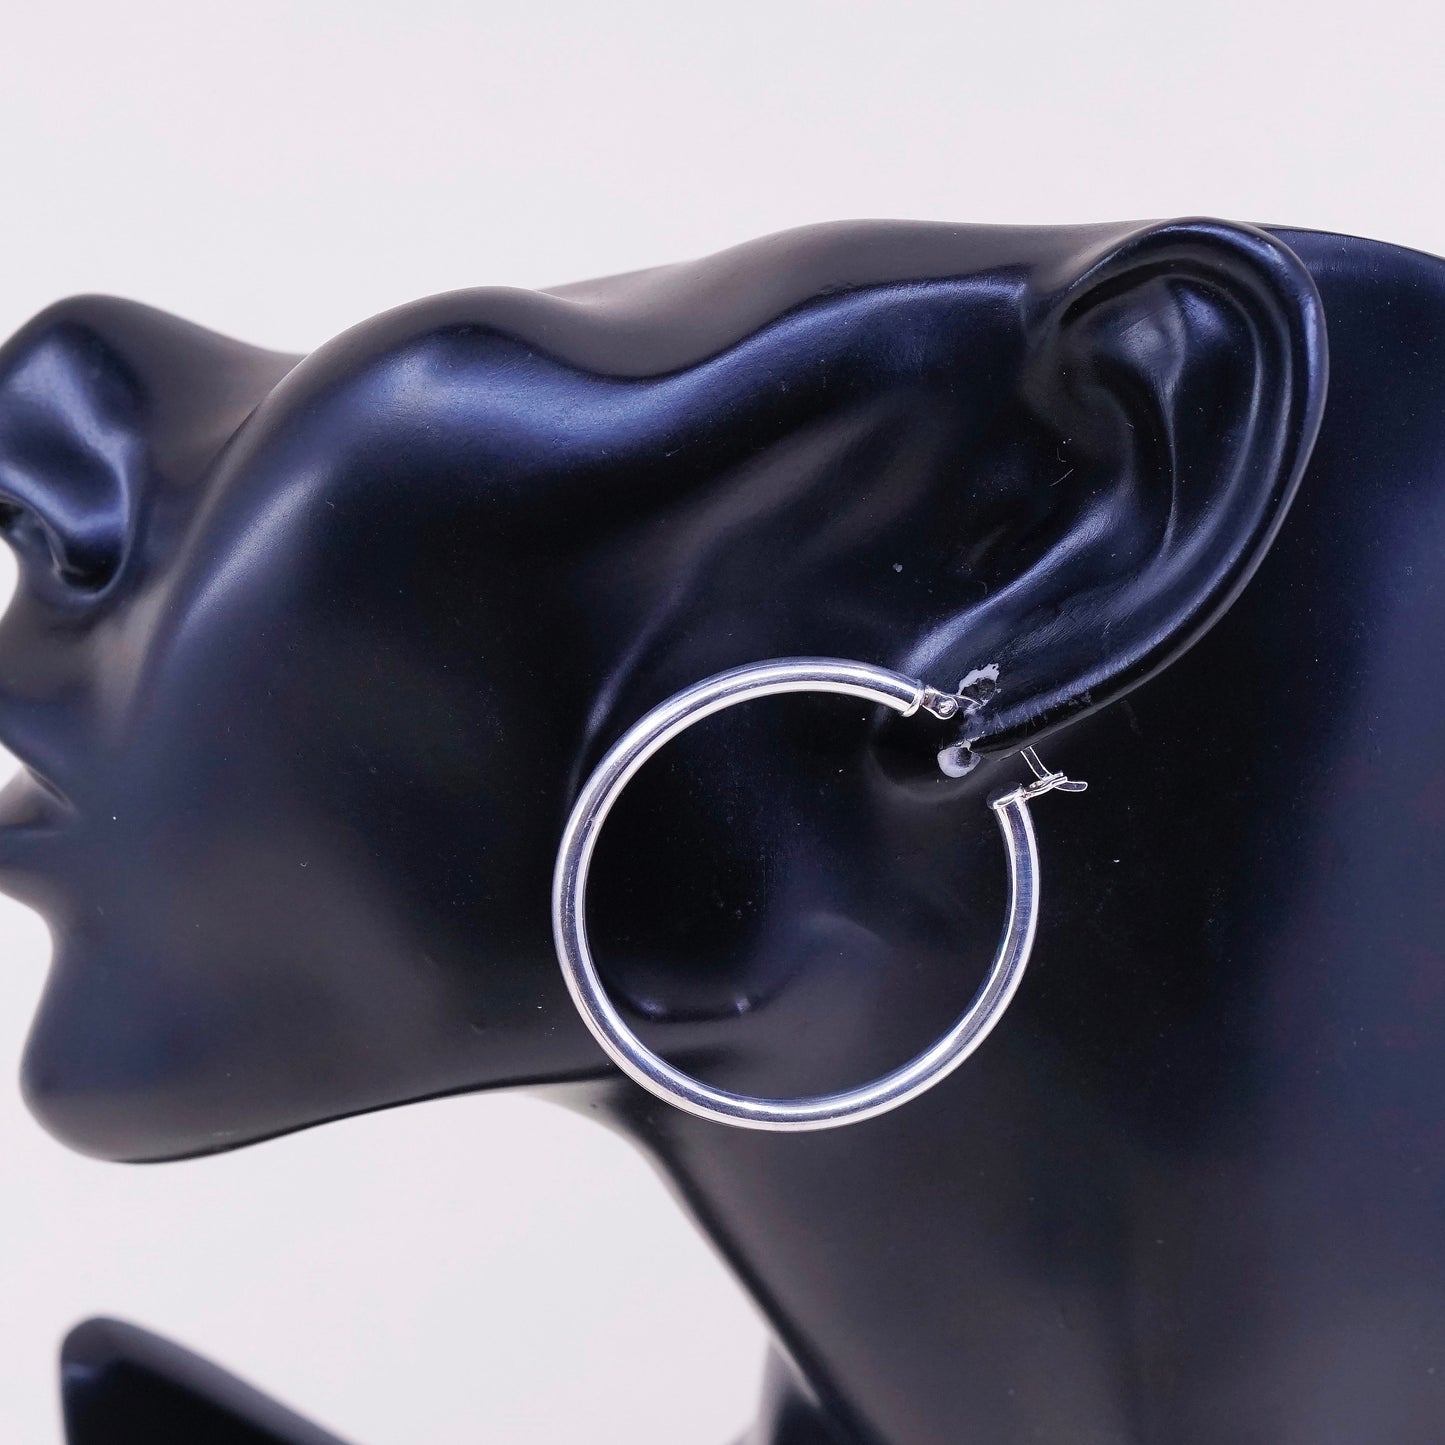 1.5” vtg sterling silver loop earrings, fashion minimalist primitive hoops